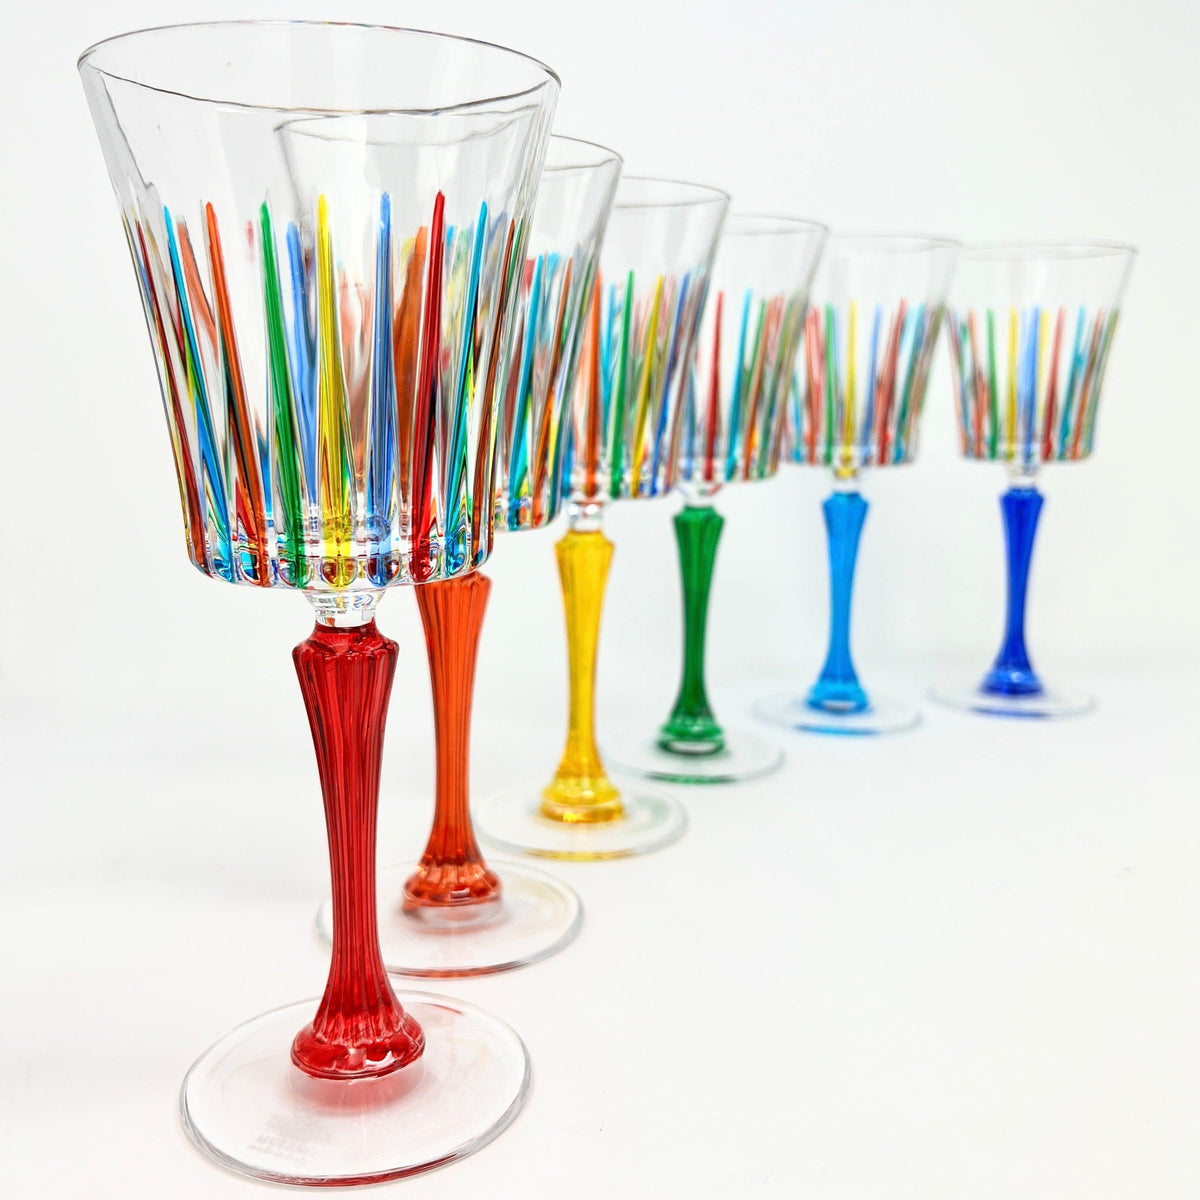 Timeless Wine Glasses, Hand-Painted Italian Crystal at MyItalianDecor